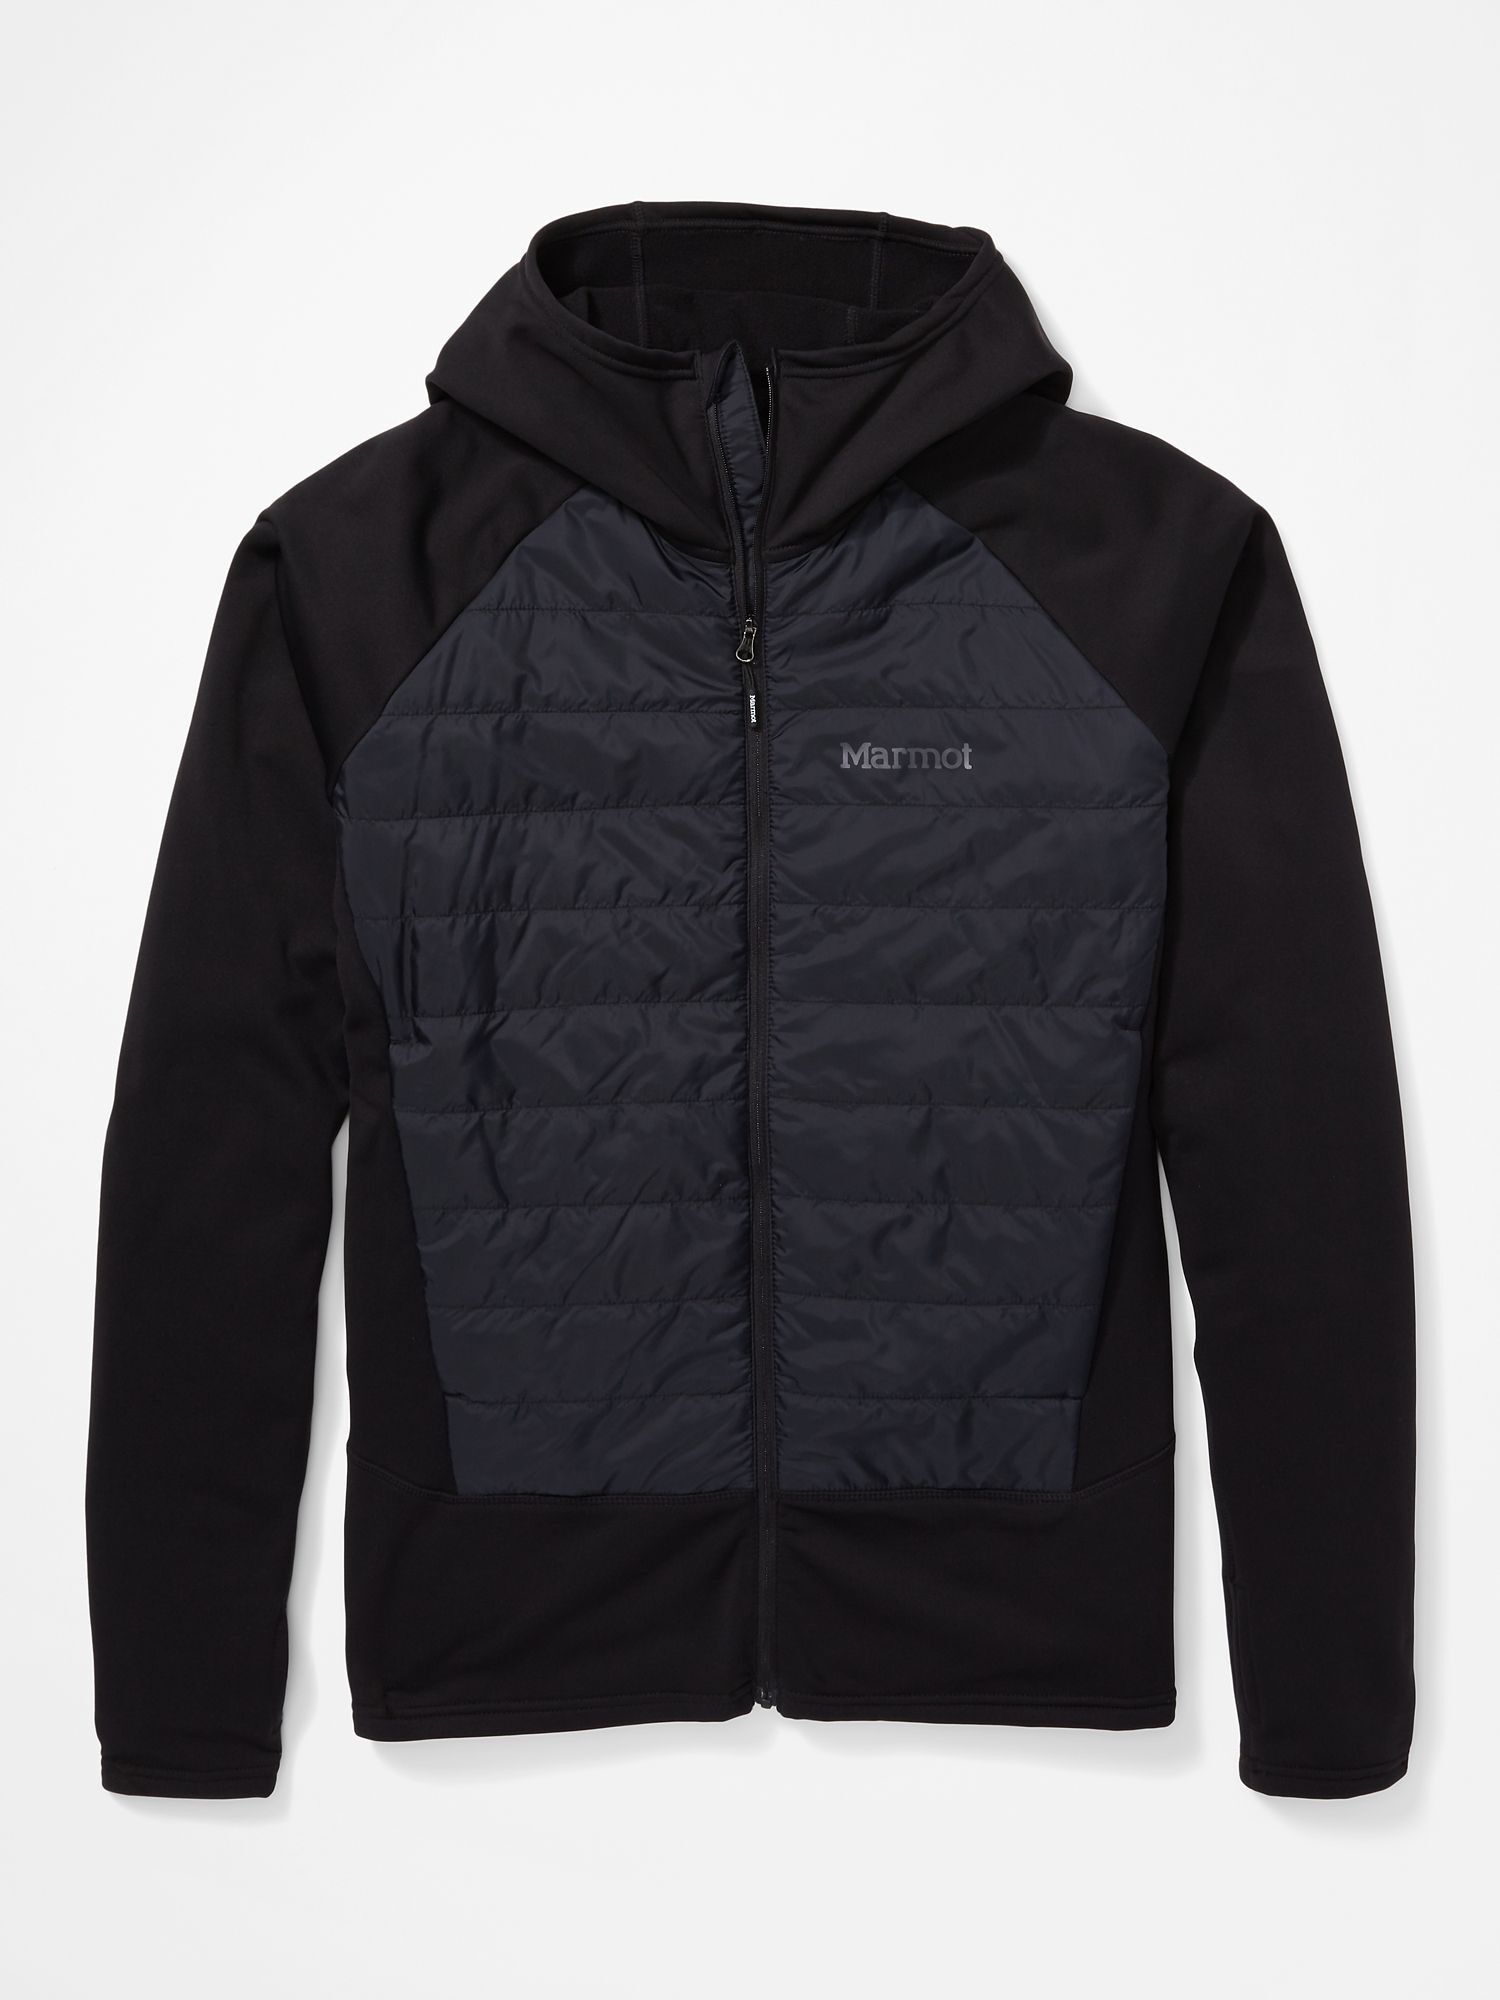 Marmot Variant Hybrid Hoody - Softshell jacket - Men's